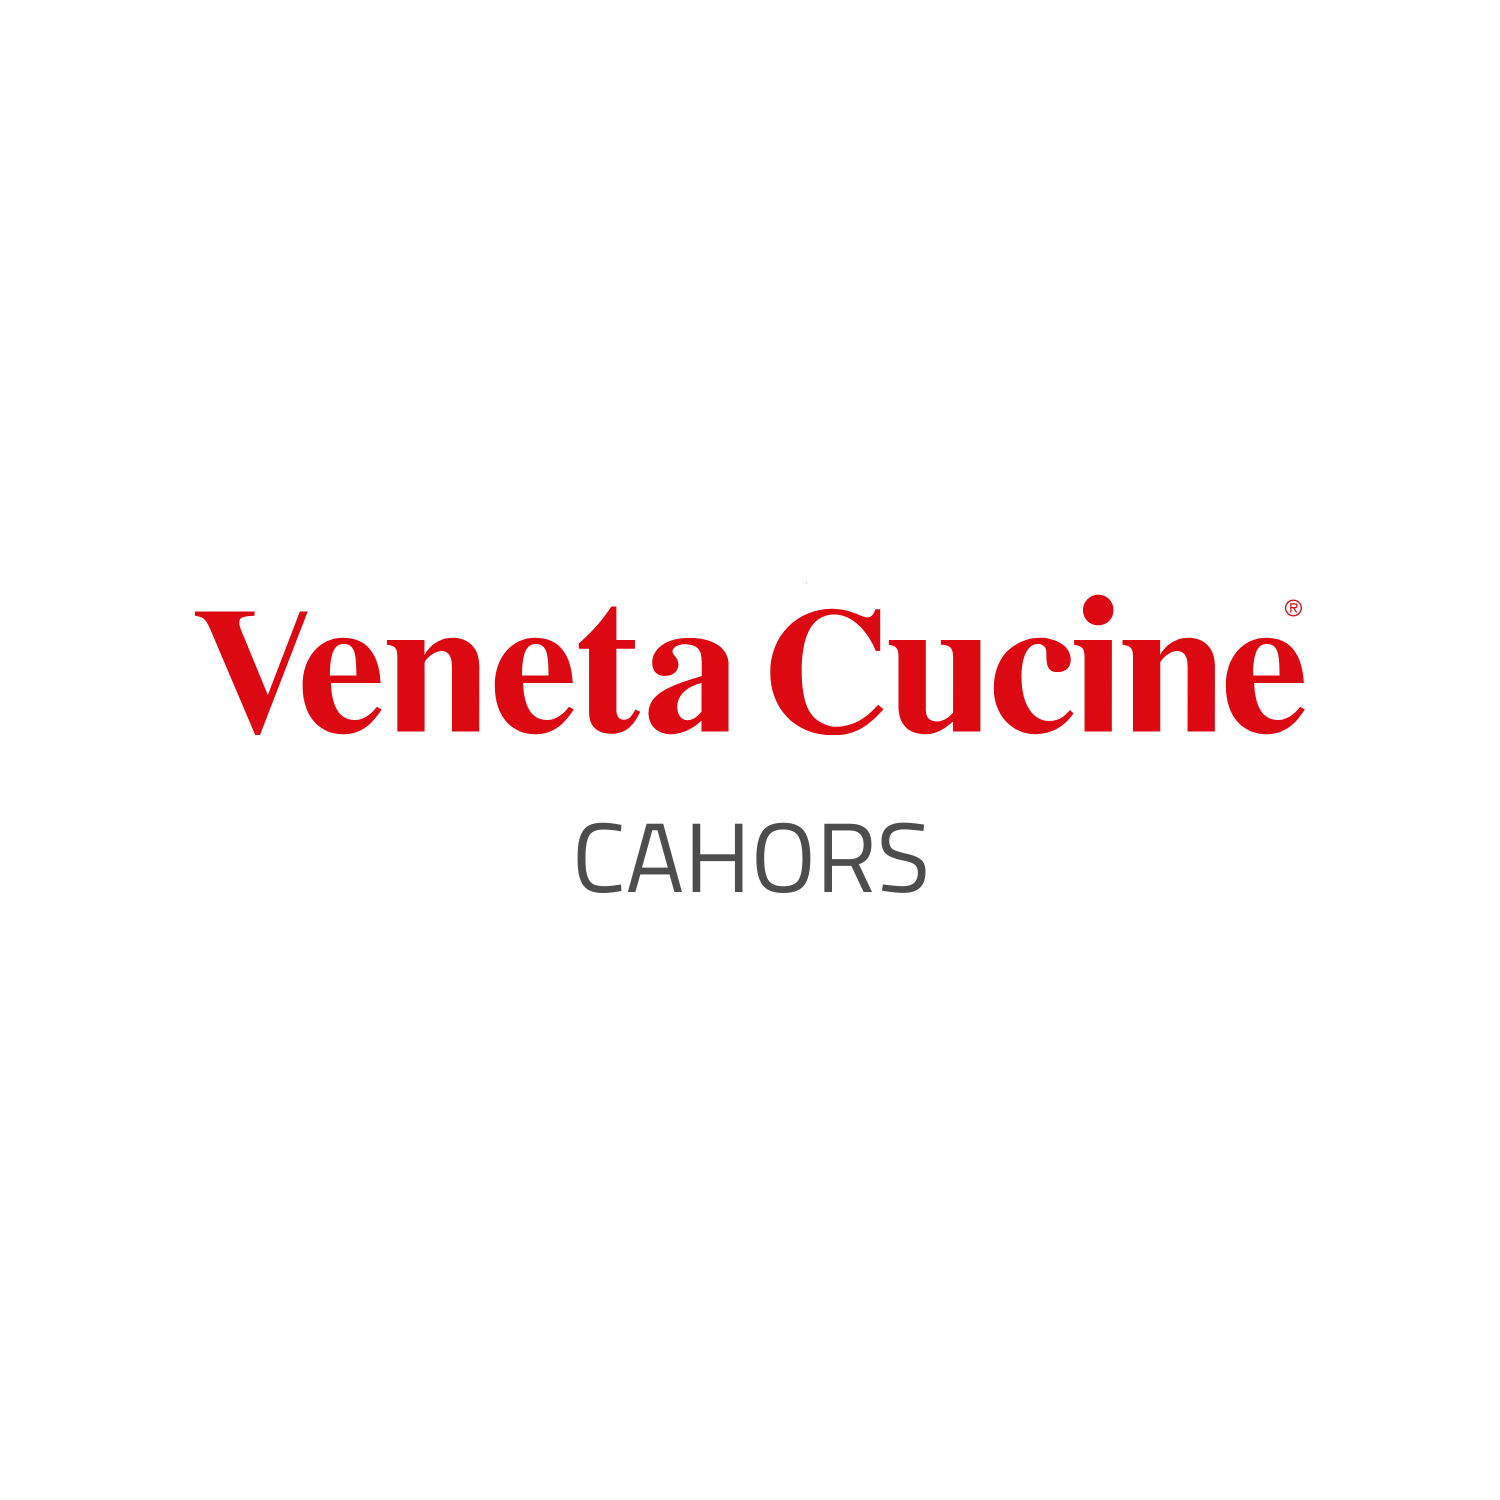 Veneta Cucine Cahors